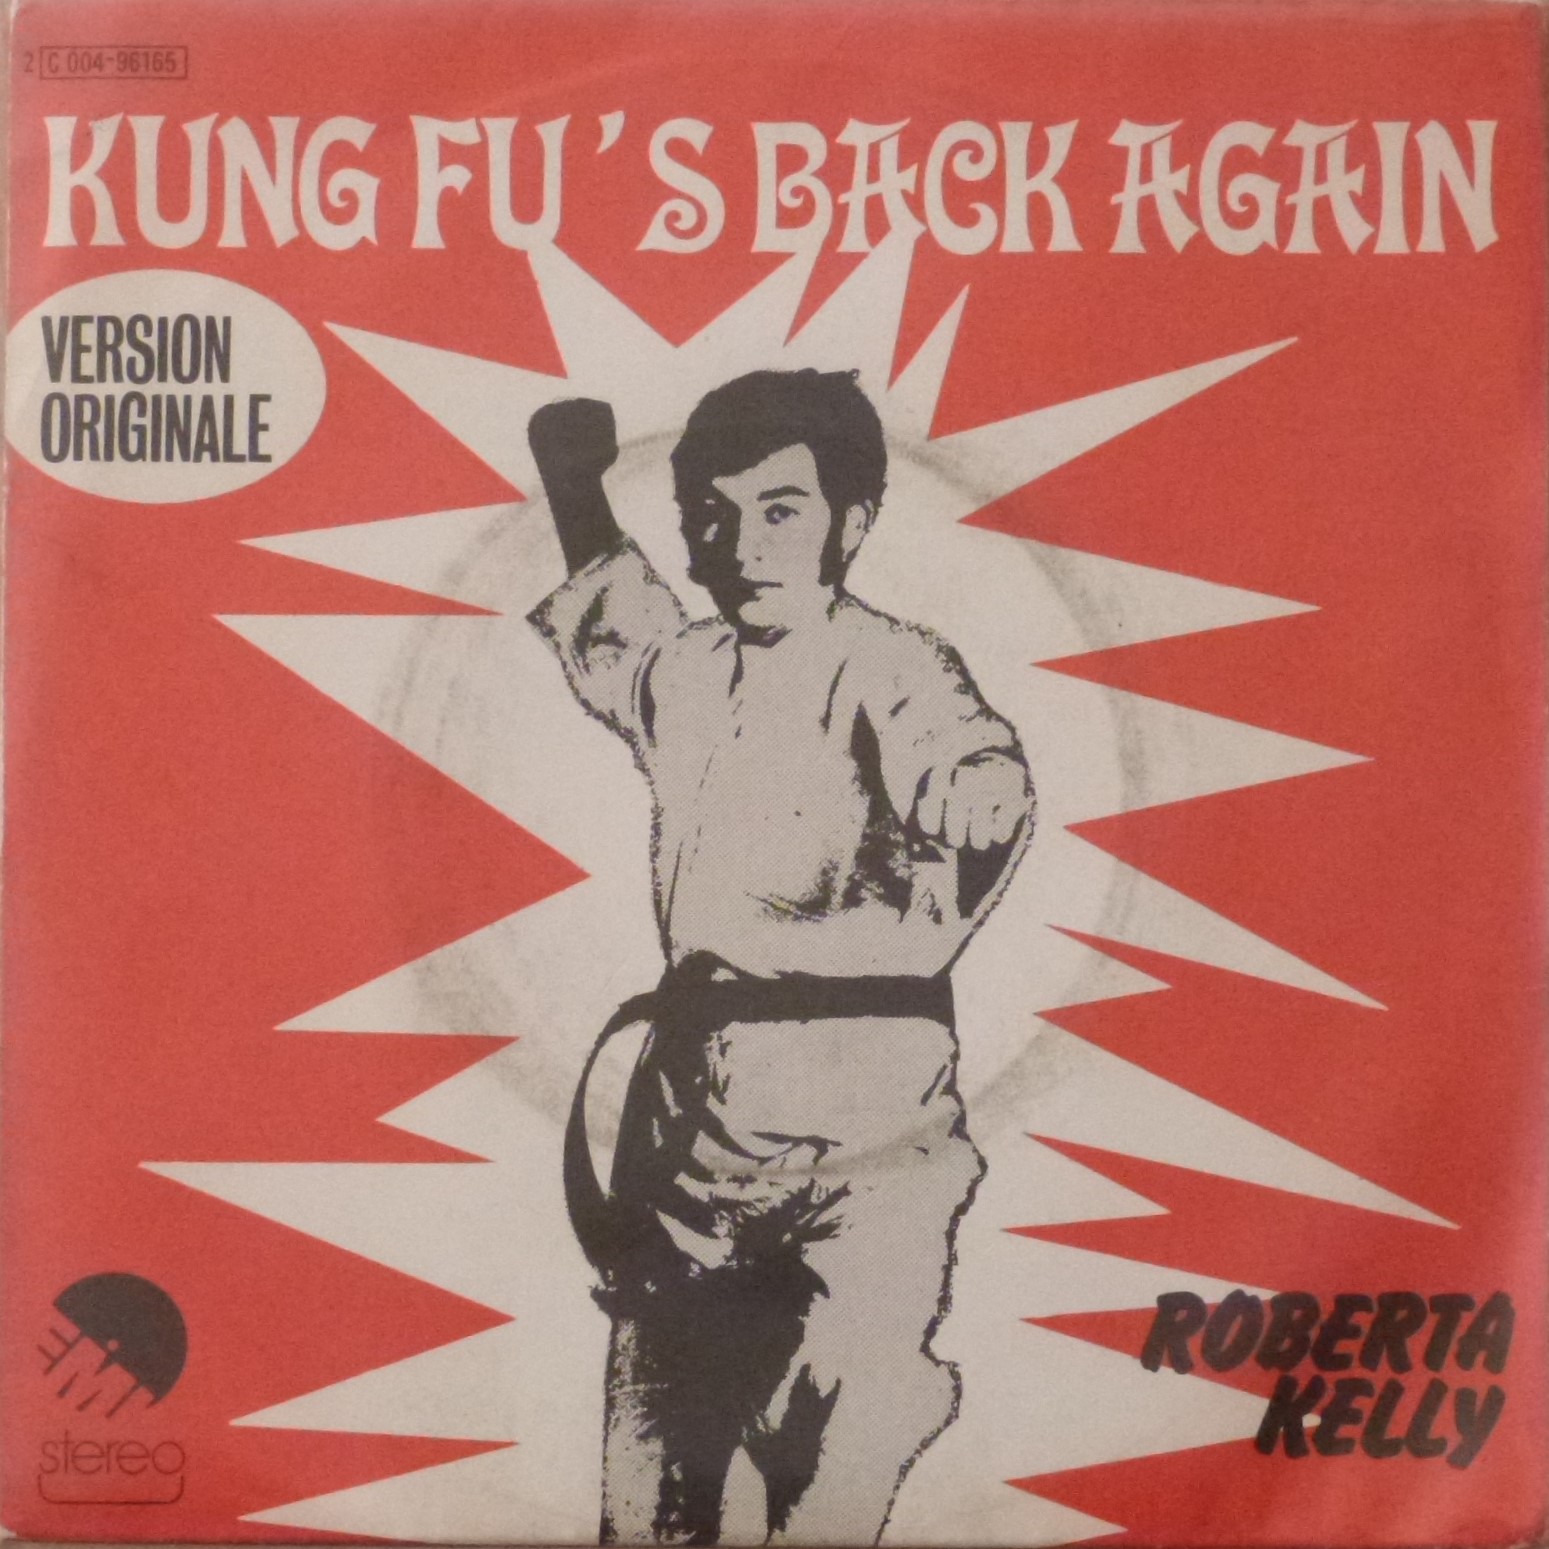 Kung Fu's Back Again